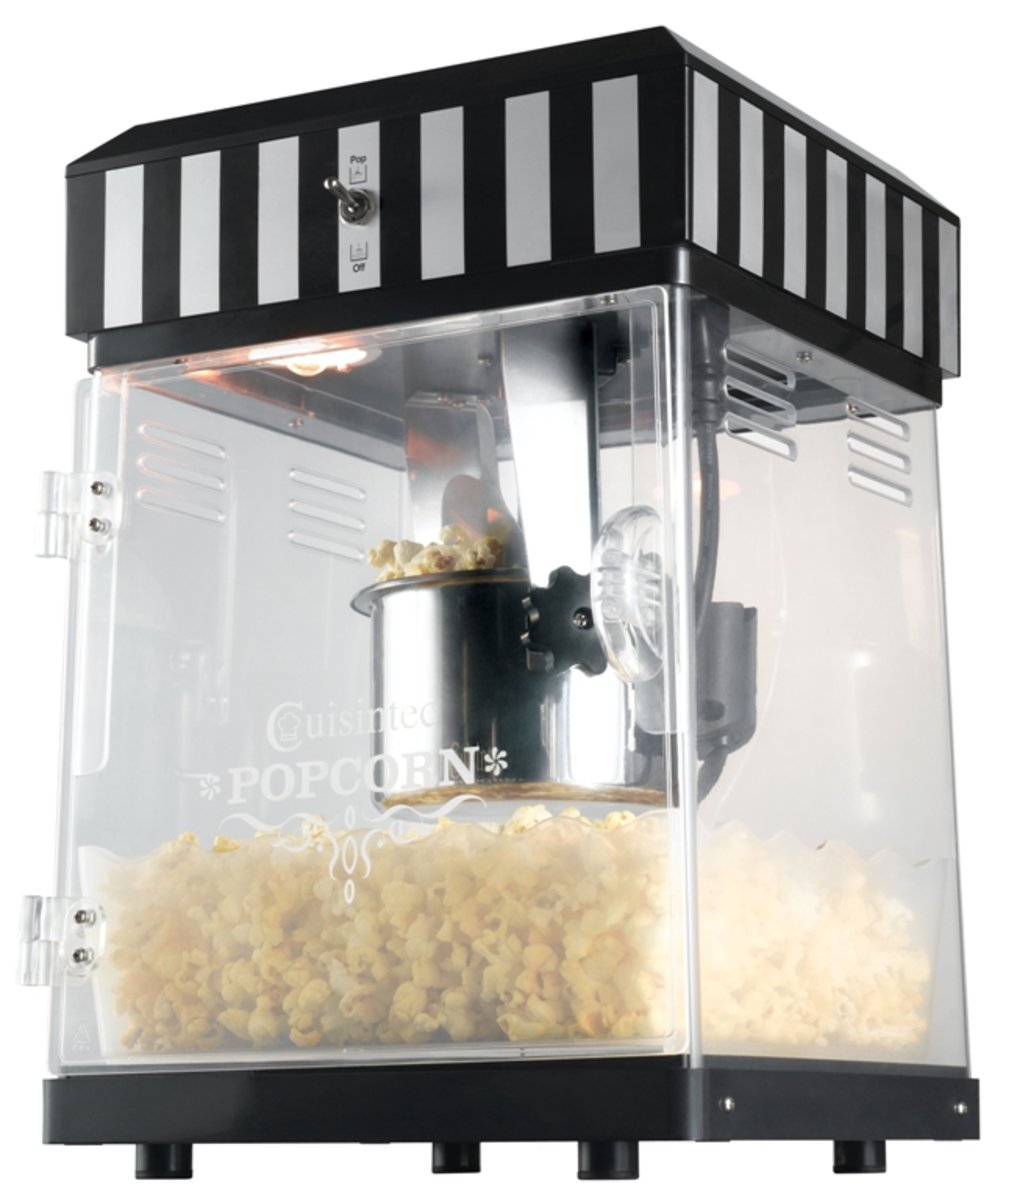 popcorn machine sold in stores